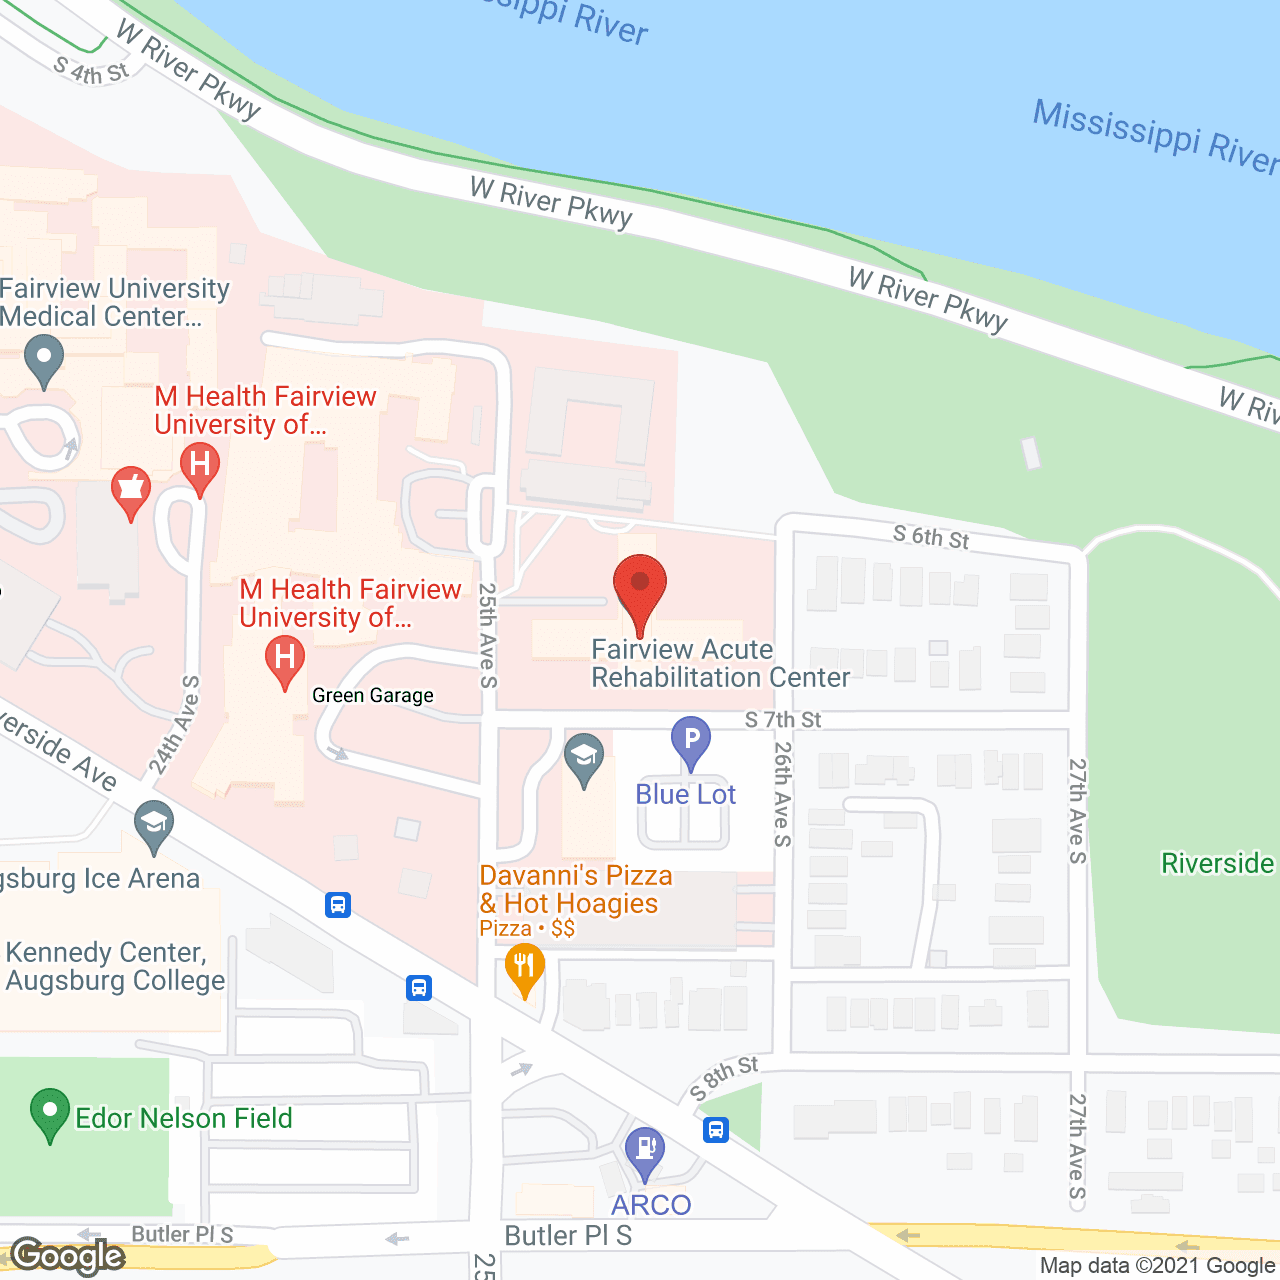 Fairview Riverside Medical Ctr in google map